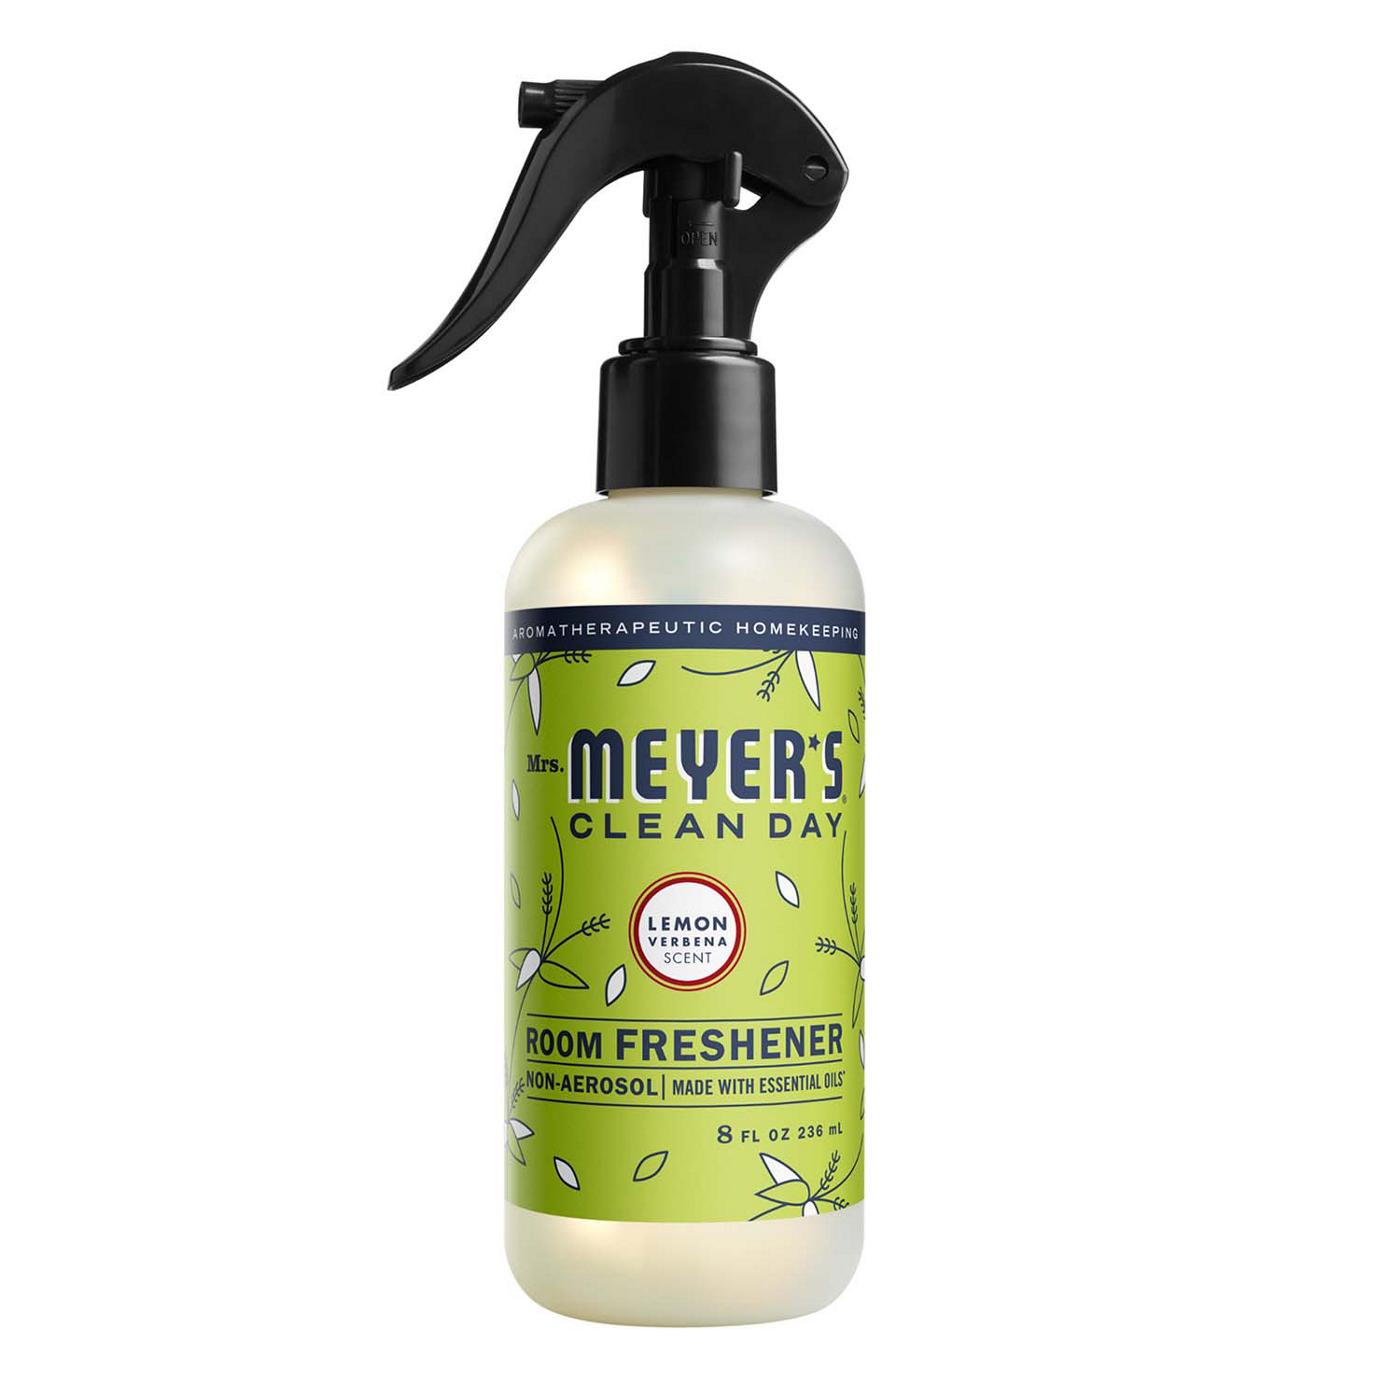 Mrs. Meyer's Clean Day Lemon Verbena Room Freshener Spray; image 1 of 6